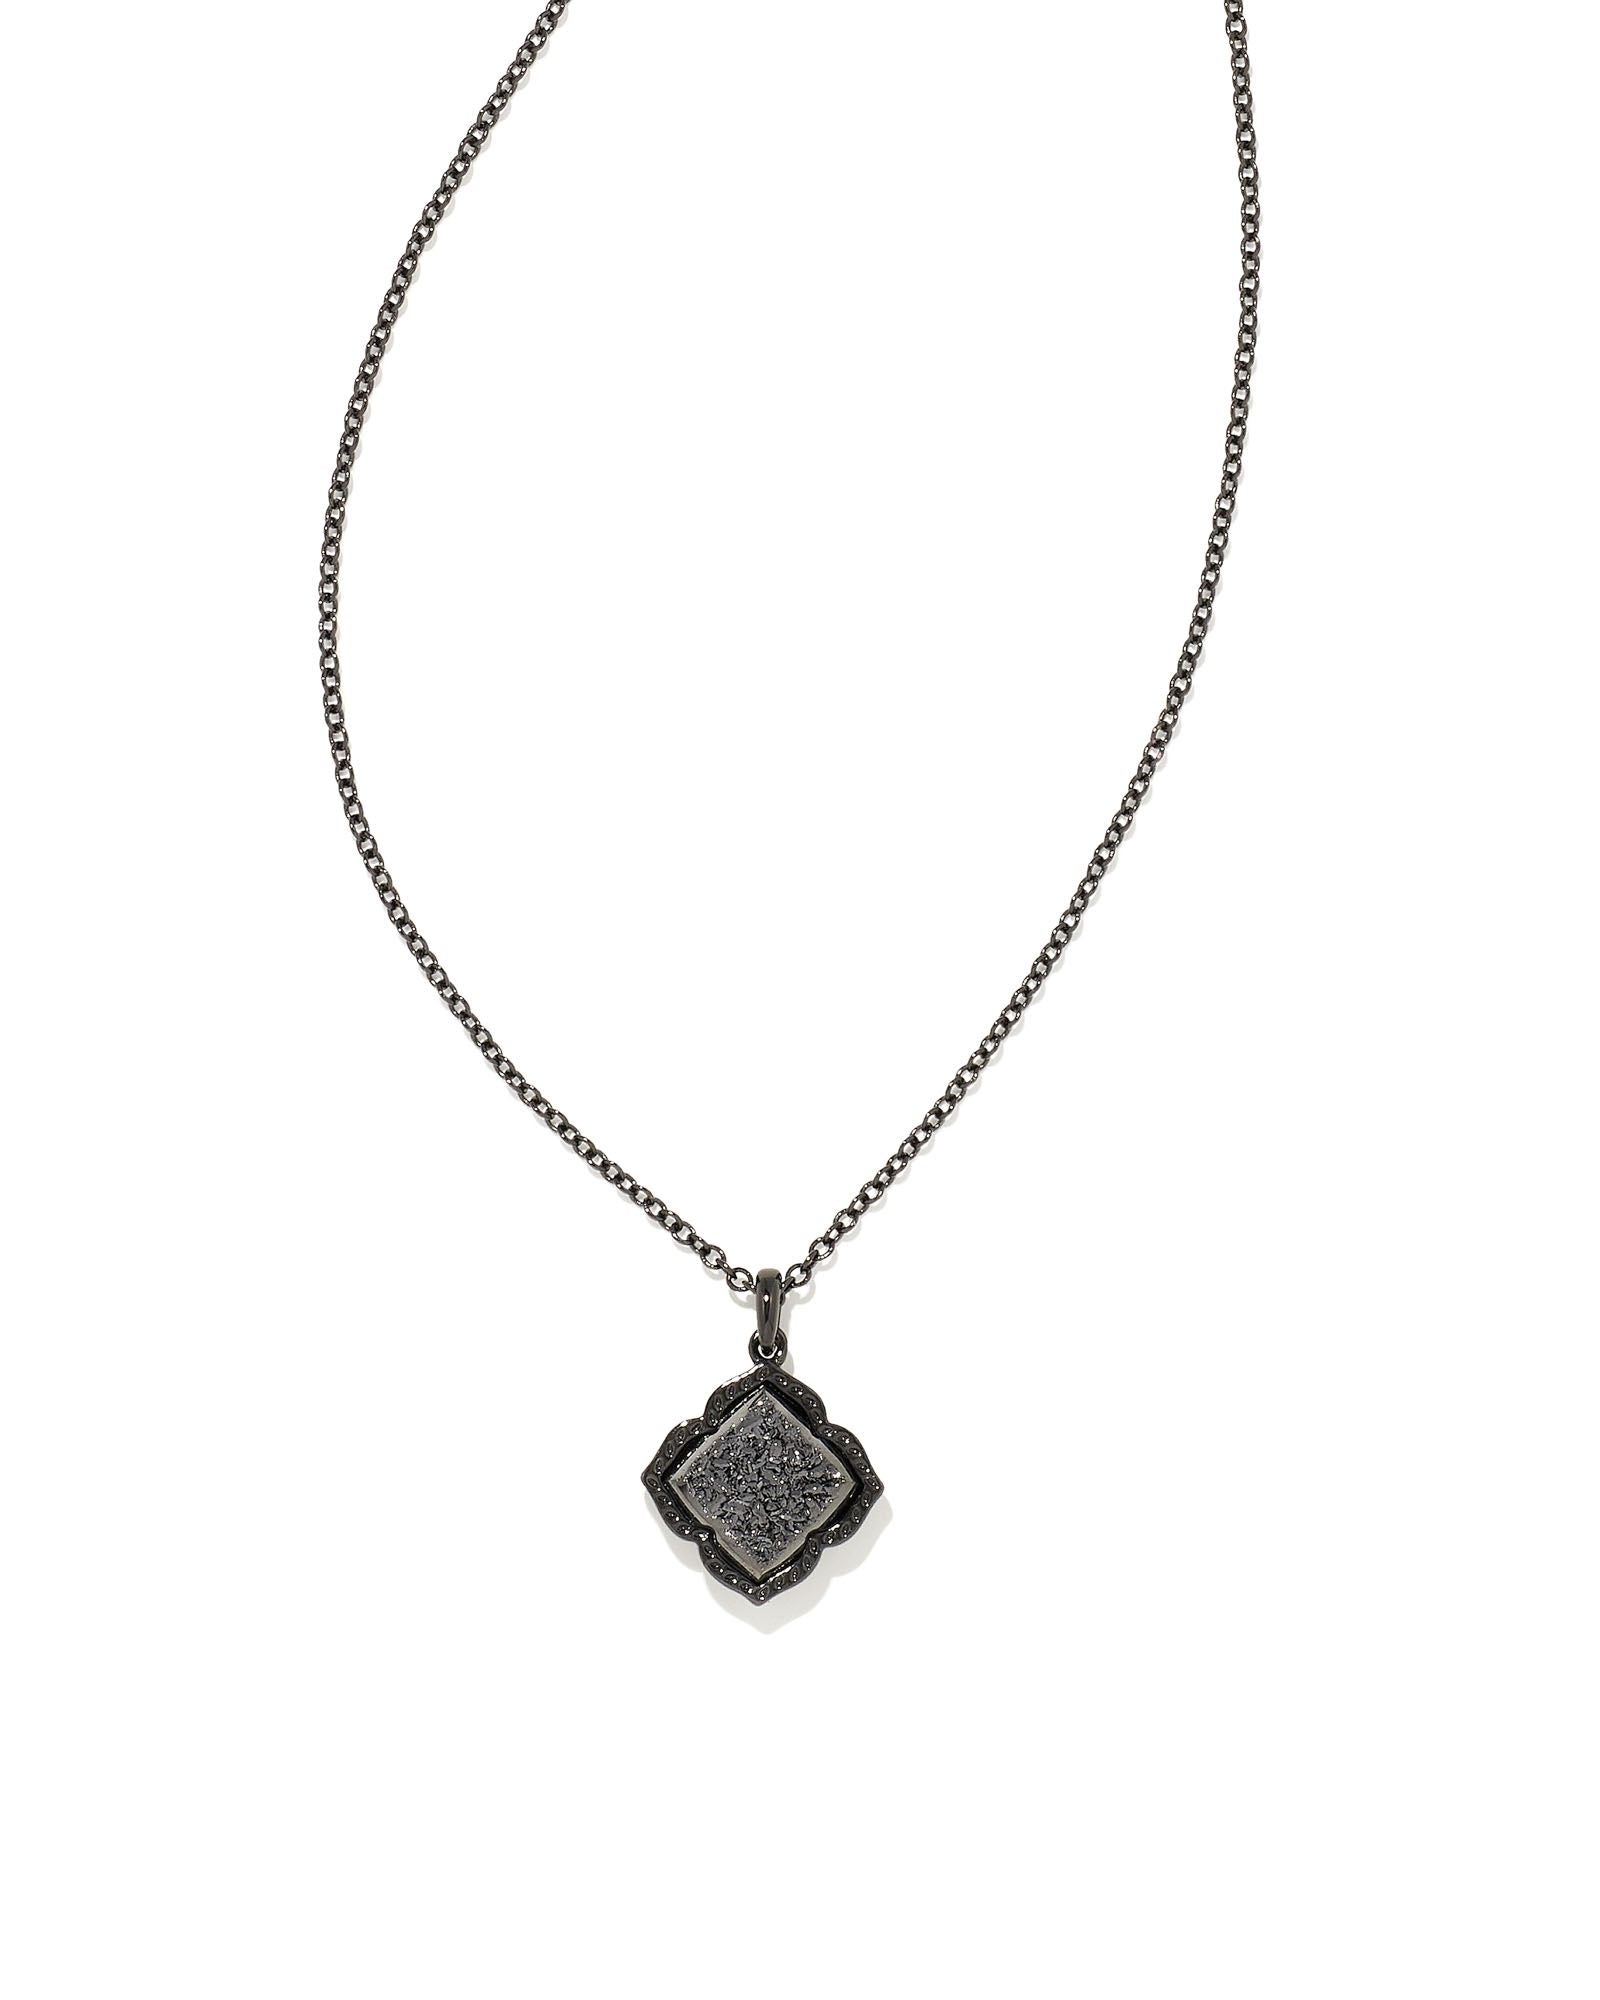 Mallory Pendant Necklace in Gunmetal Black Drusy